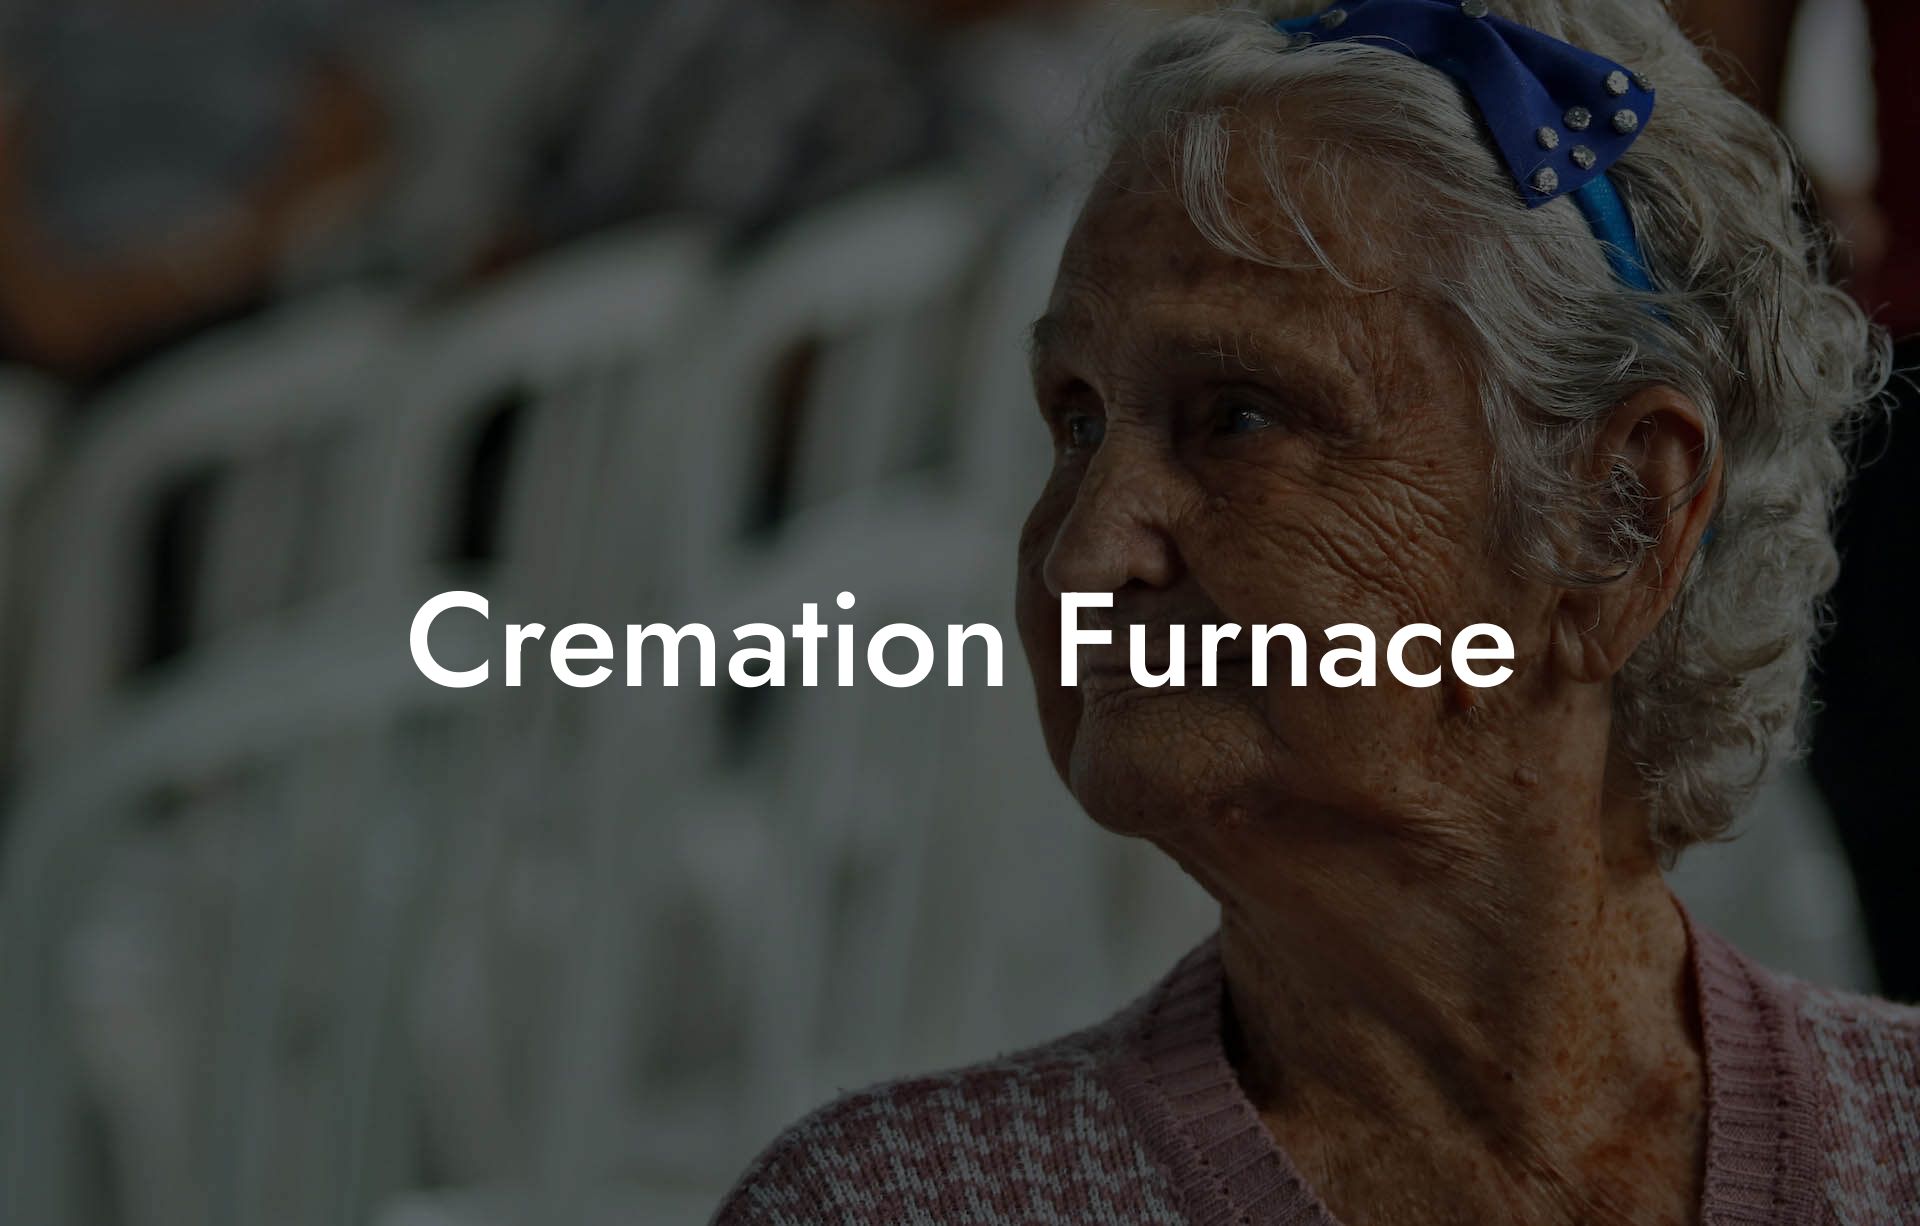 Cremation Furnace